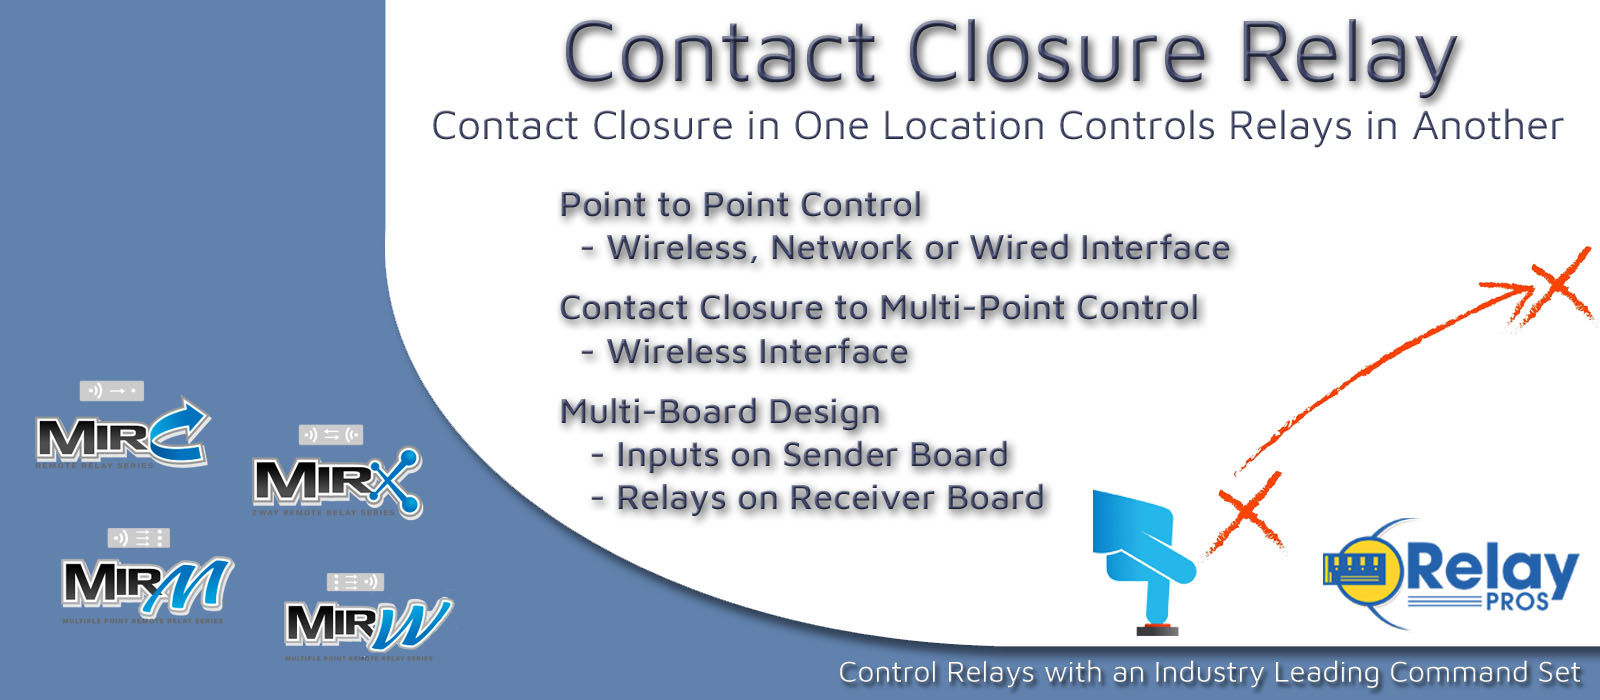 Contact Closure Relay